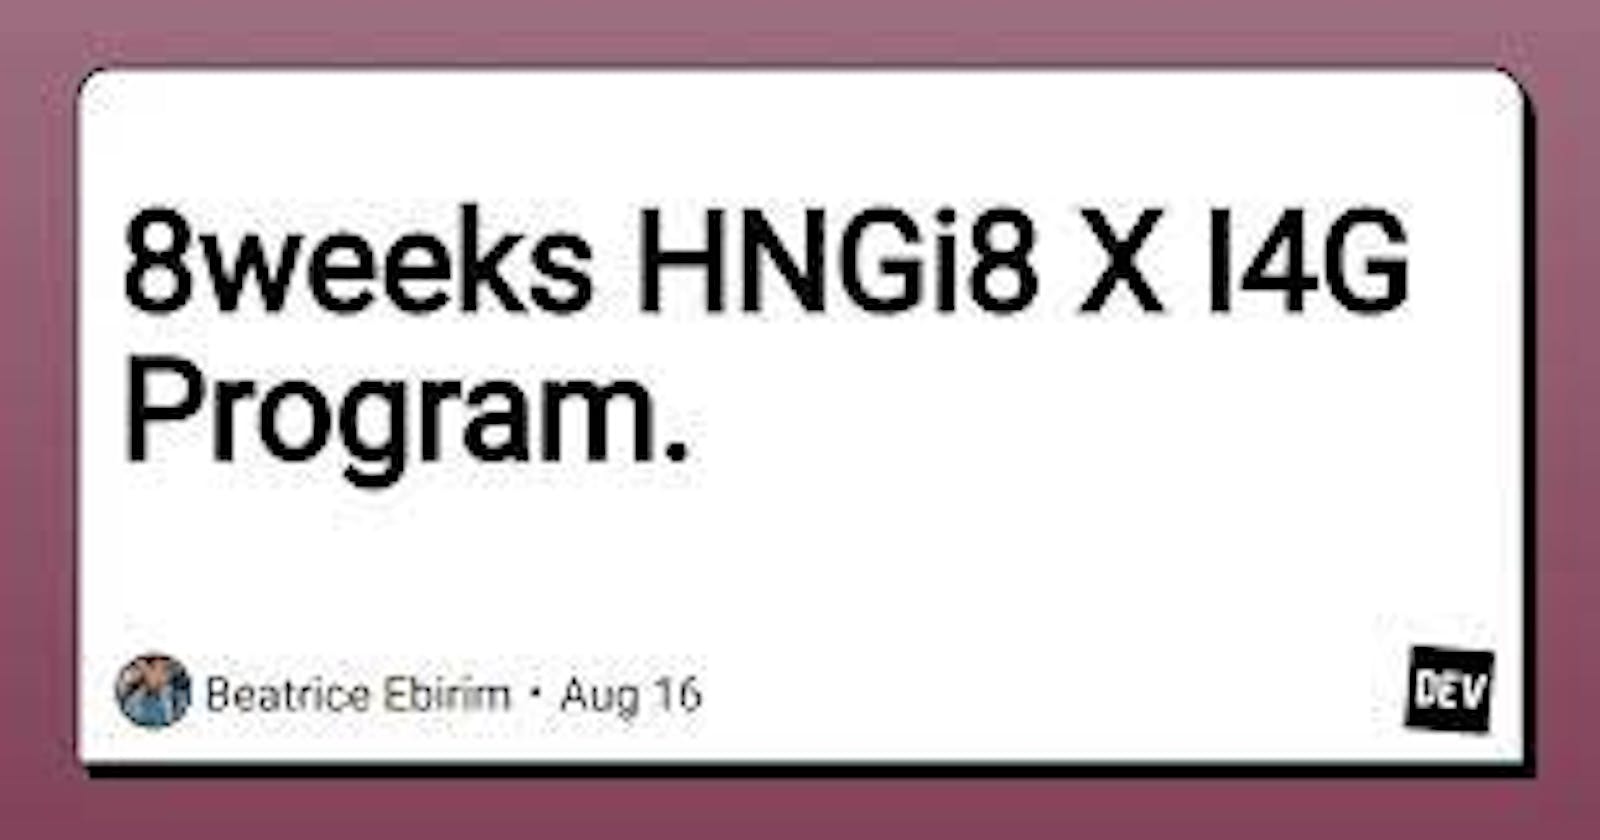 HNGi8 X 14G INTERNSHIP PROGRAM